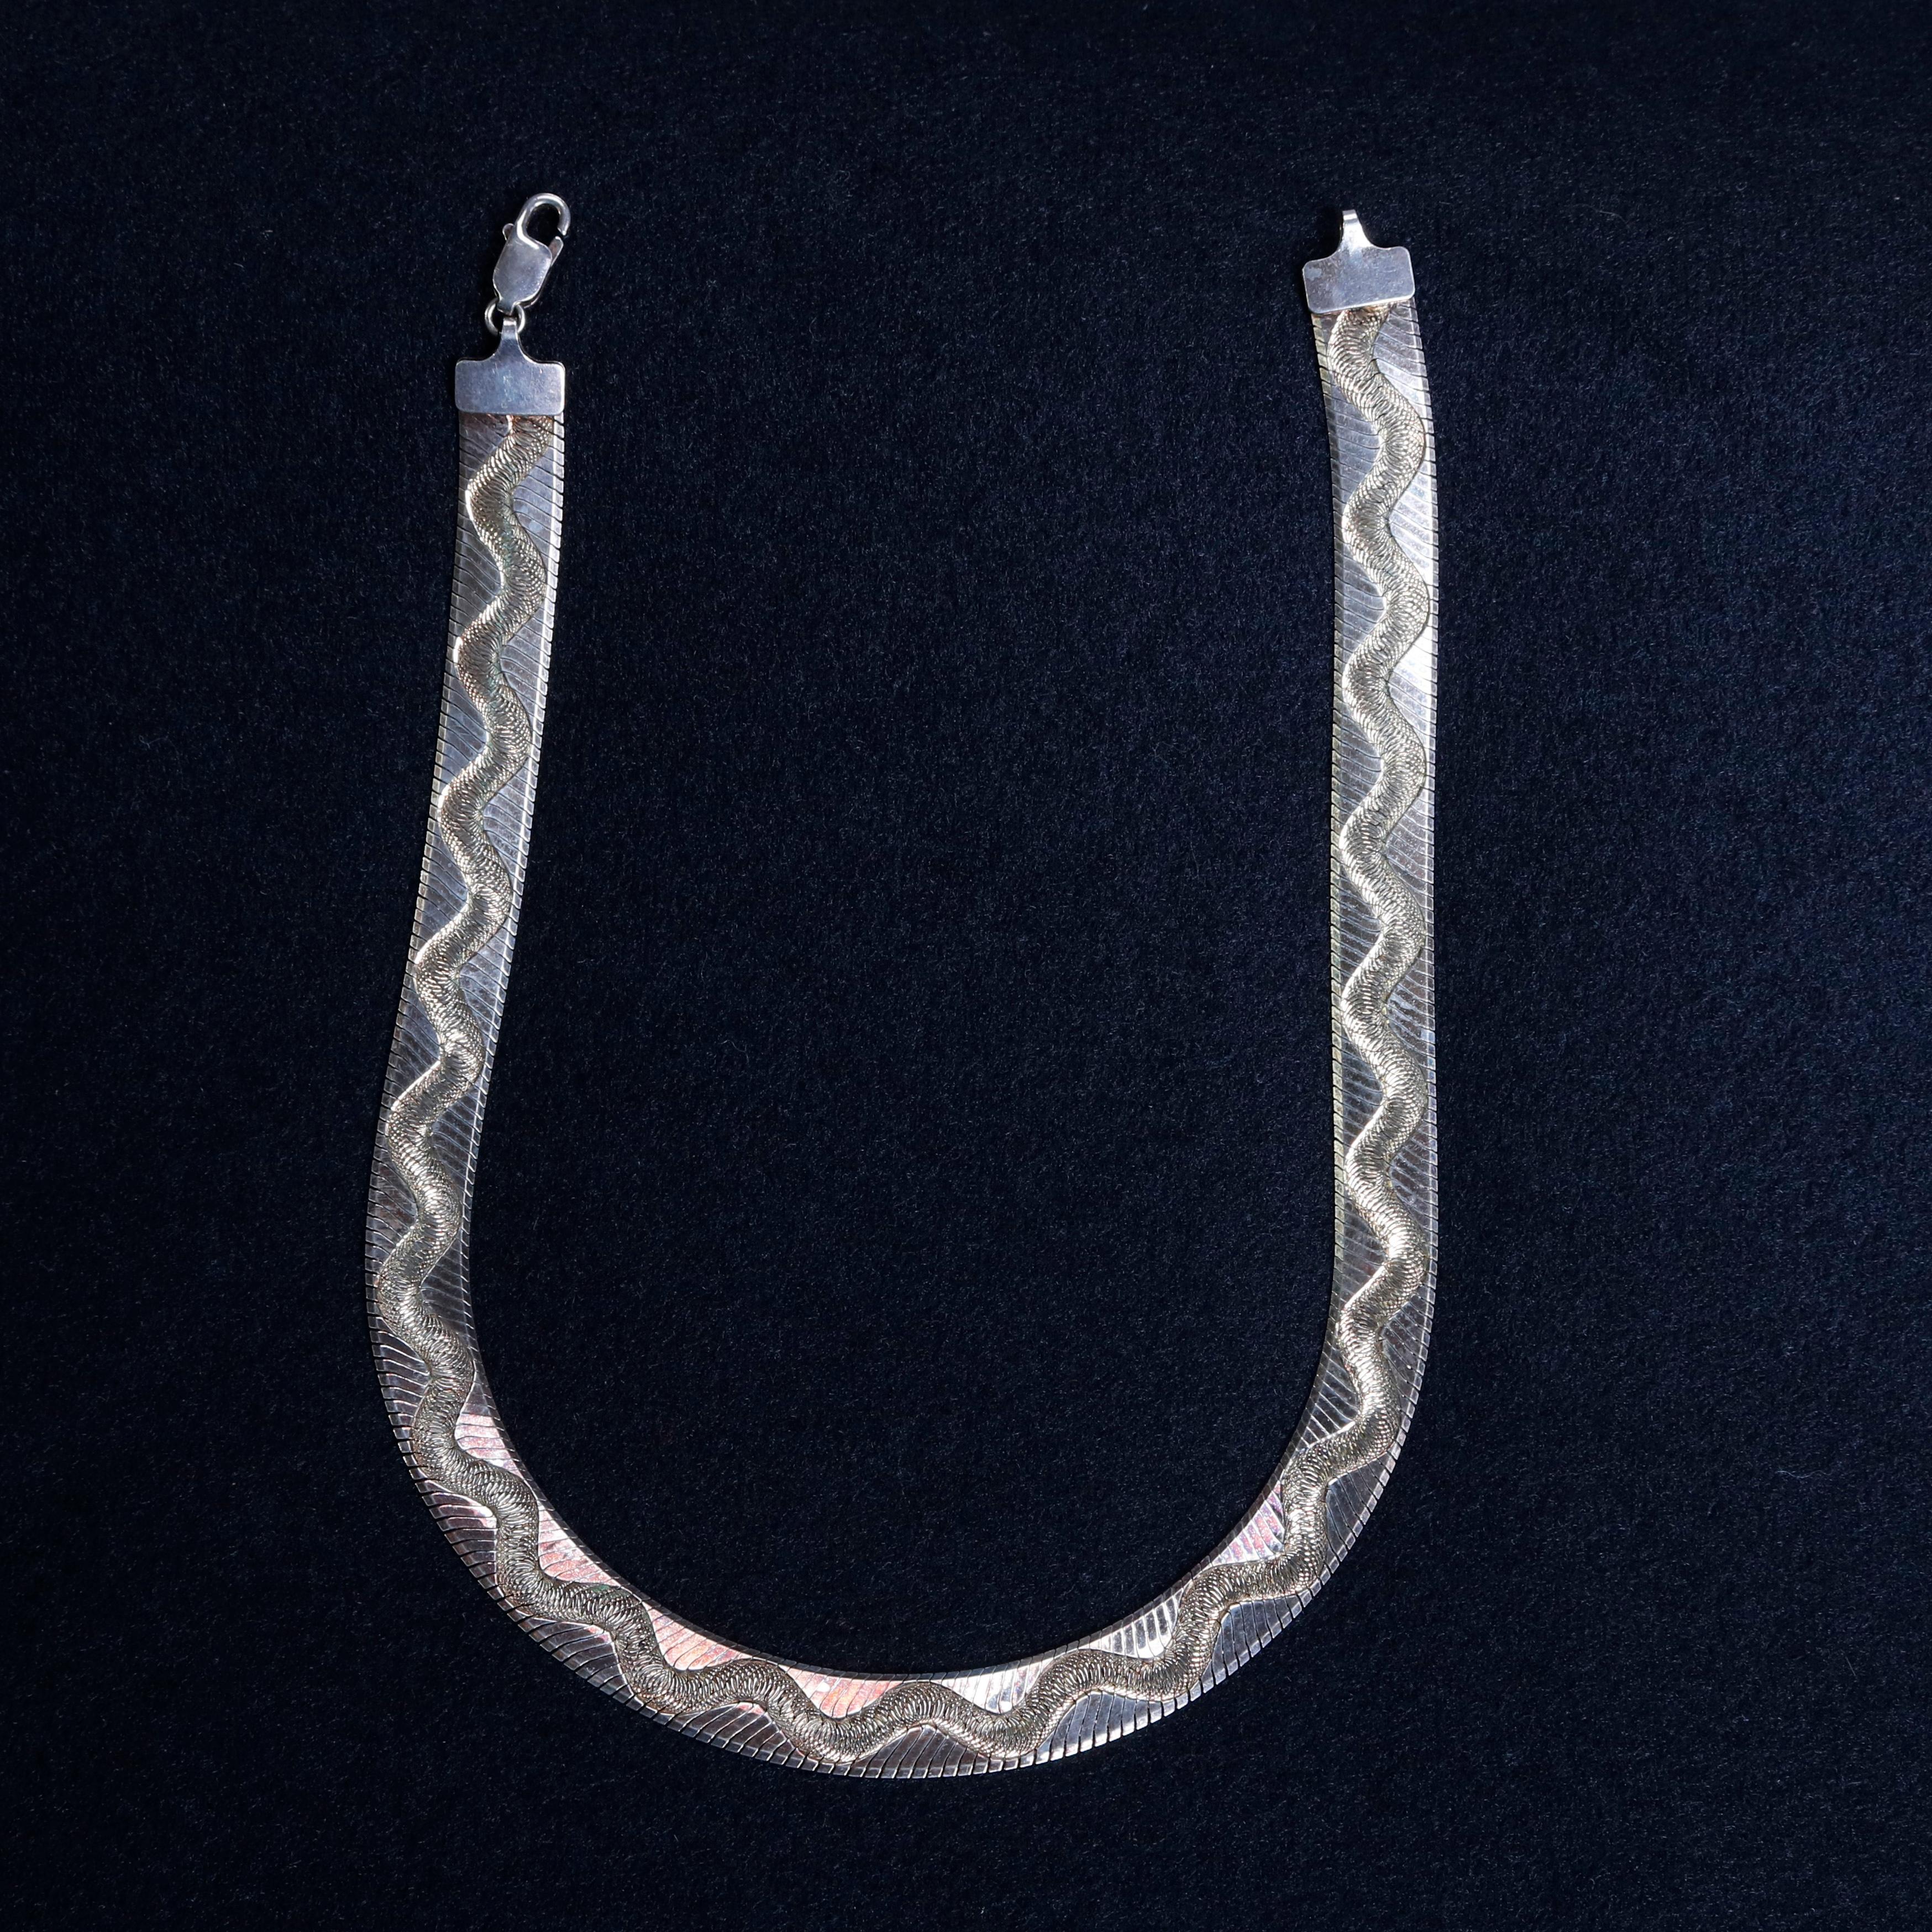 A sterling silver herringbone link necklace offers engraved zig-zag snake patterning, 17